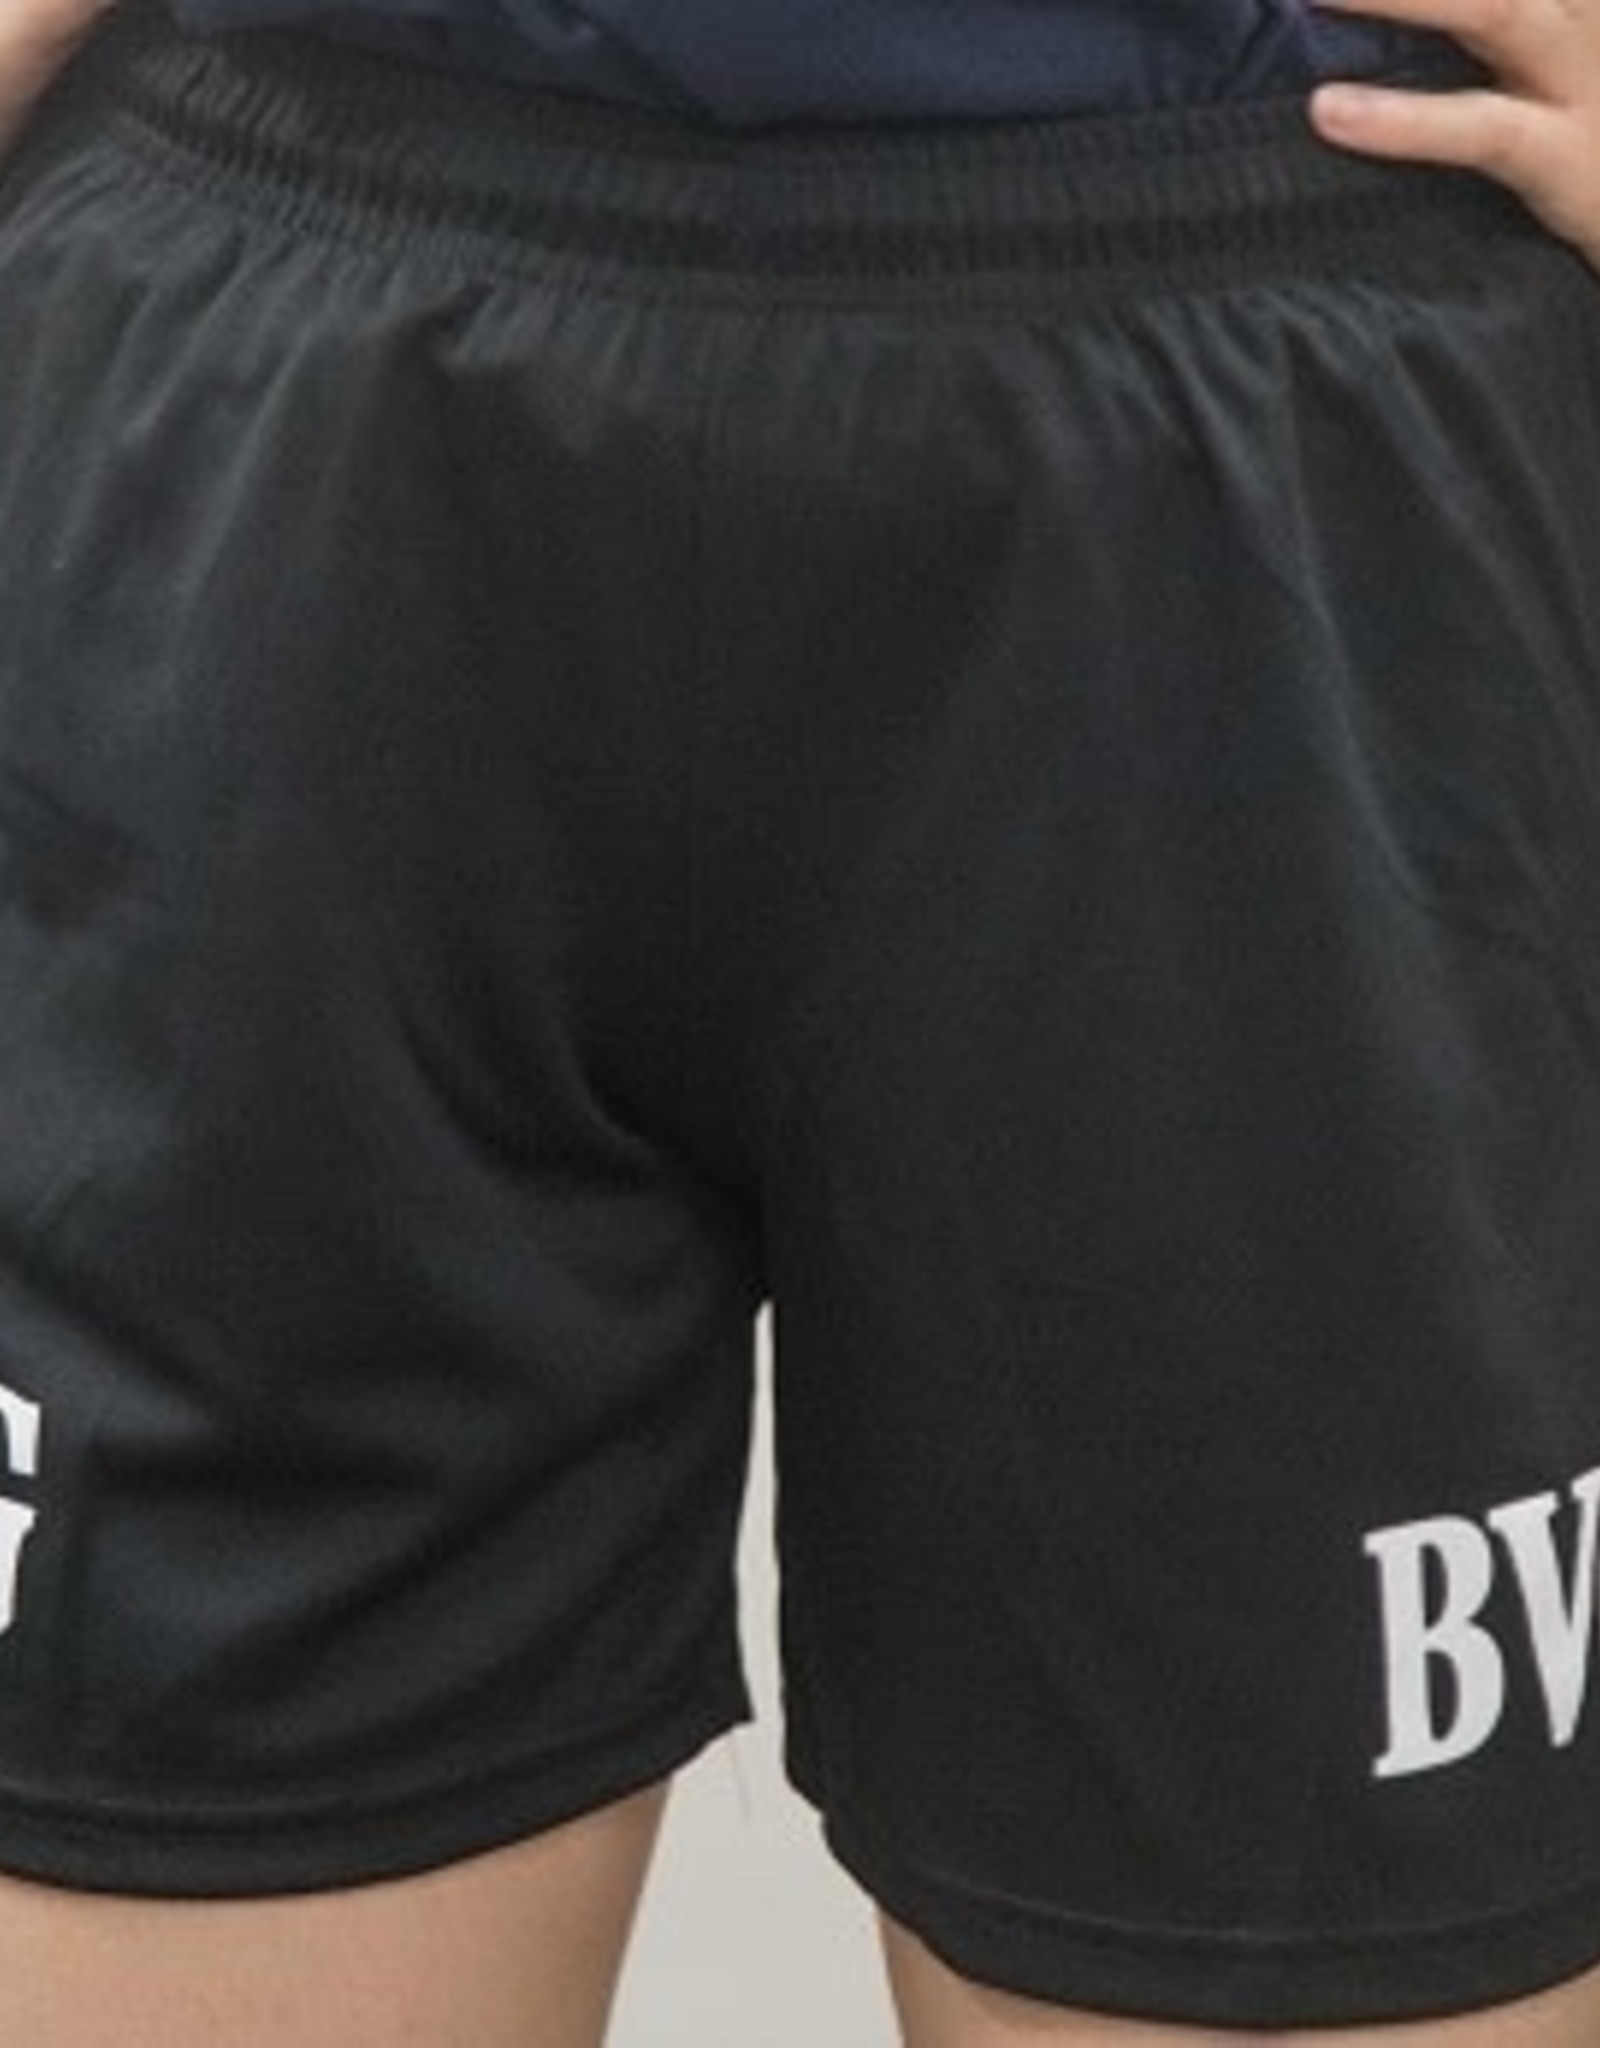 Gym Shorts Ladies Black